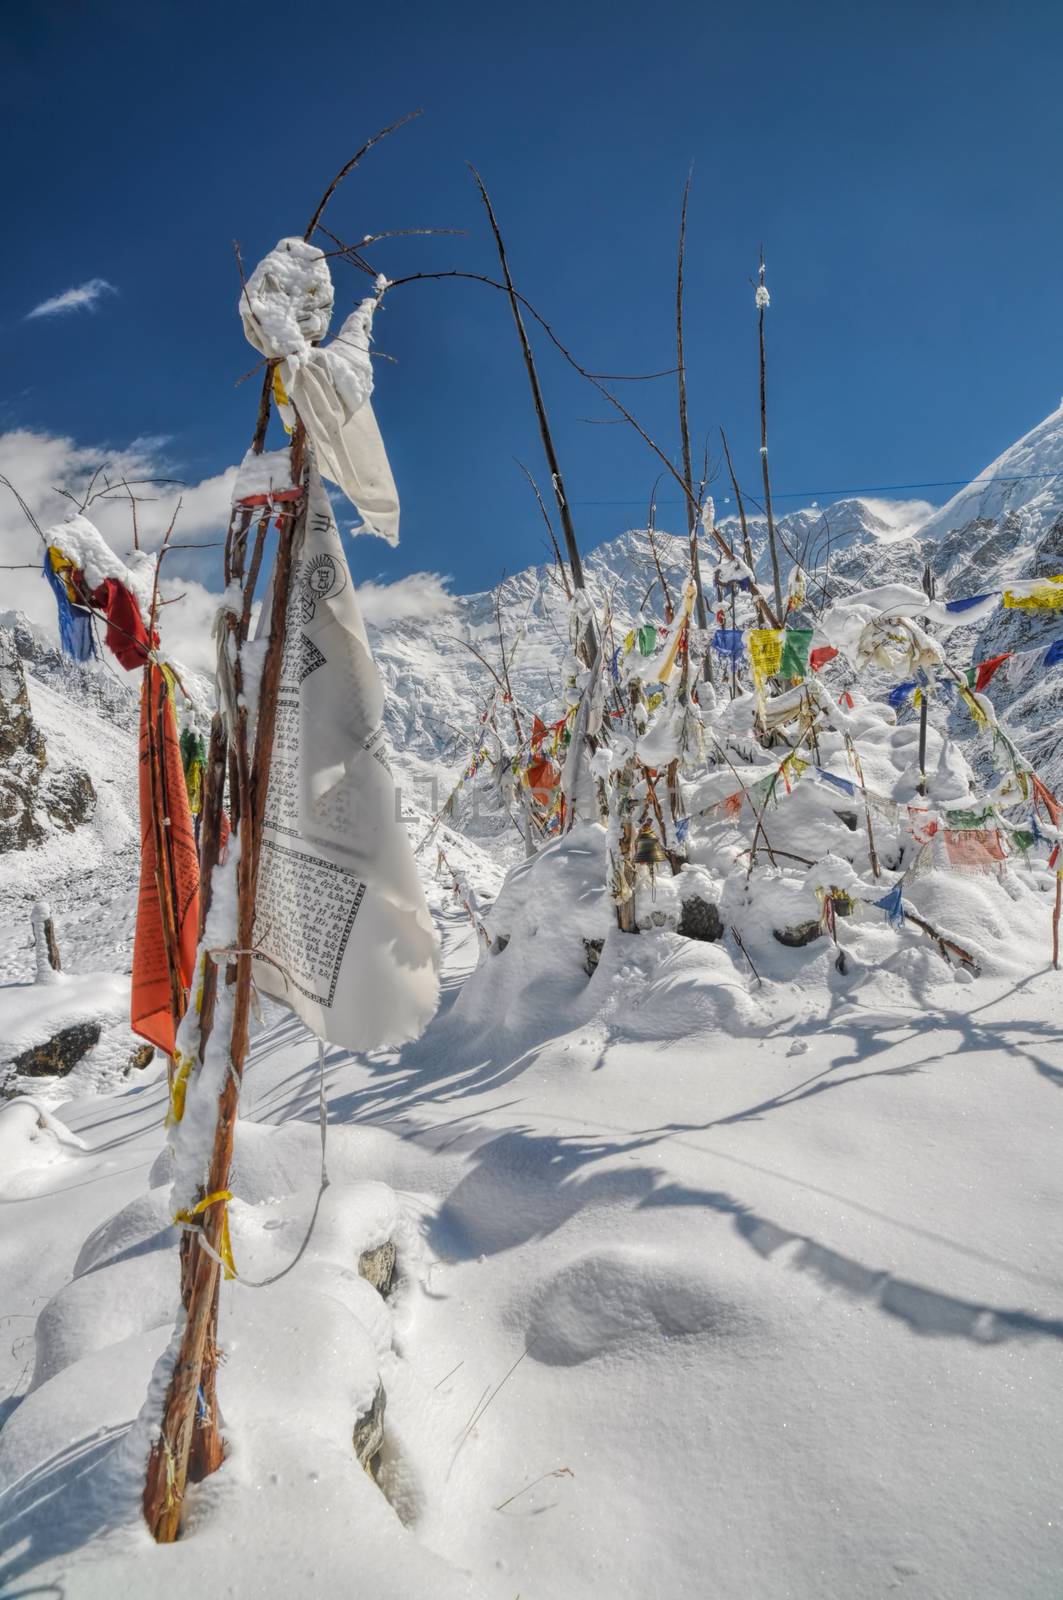 Prayer flags in Himalayas by MichalKnitl